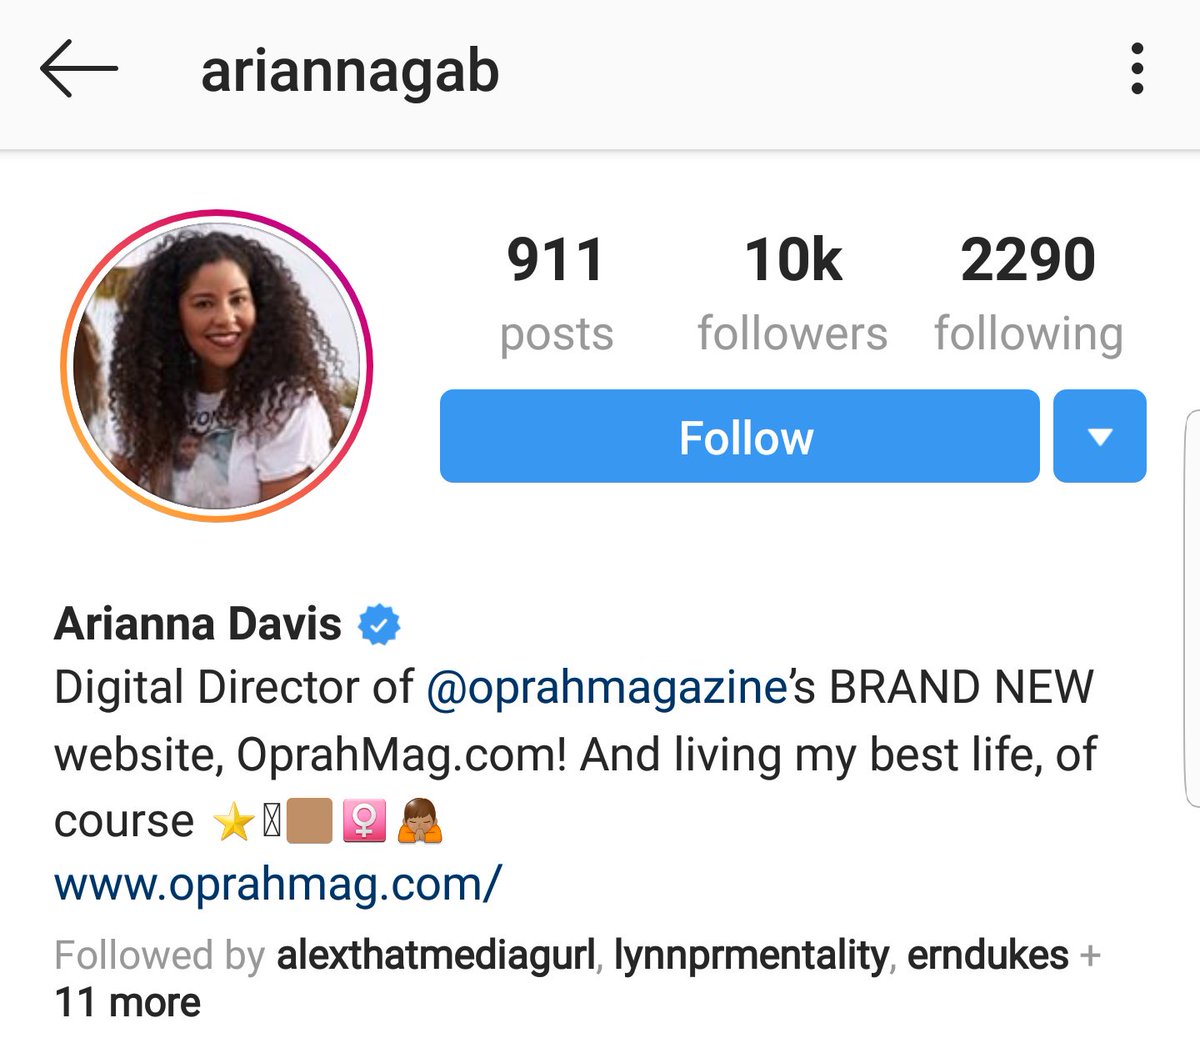 Arianna DavisIG: ariannagabDigital Director of Oprah Magazine's new website